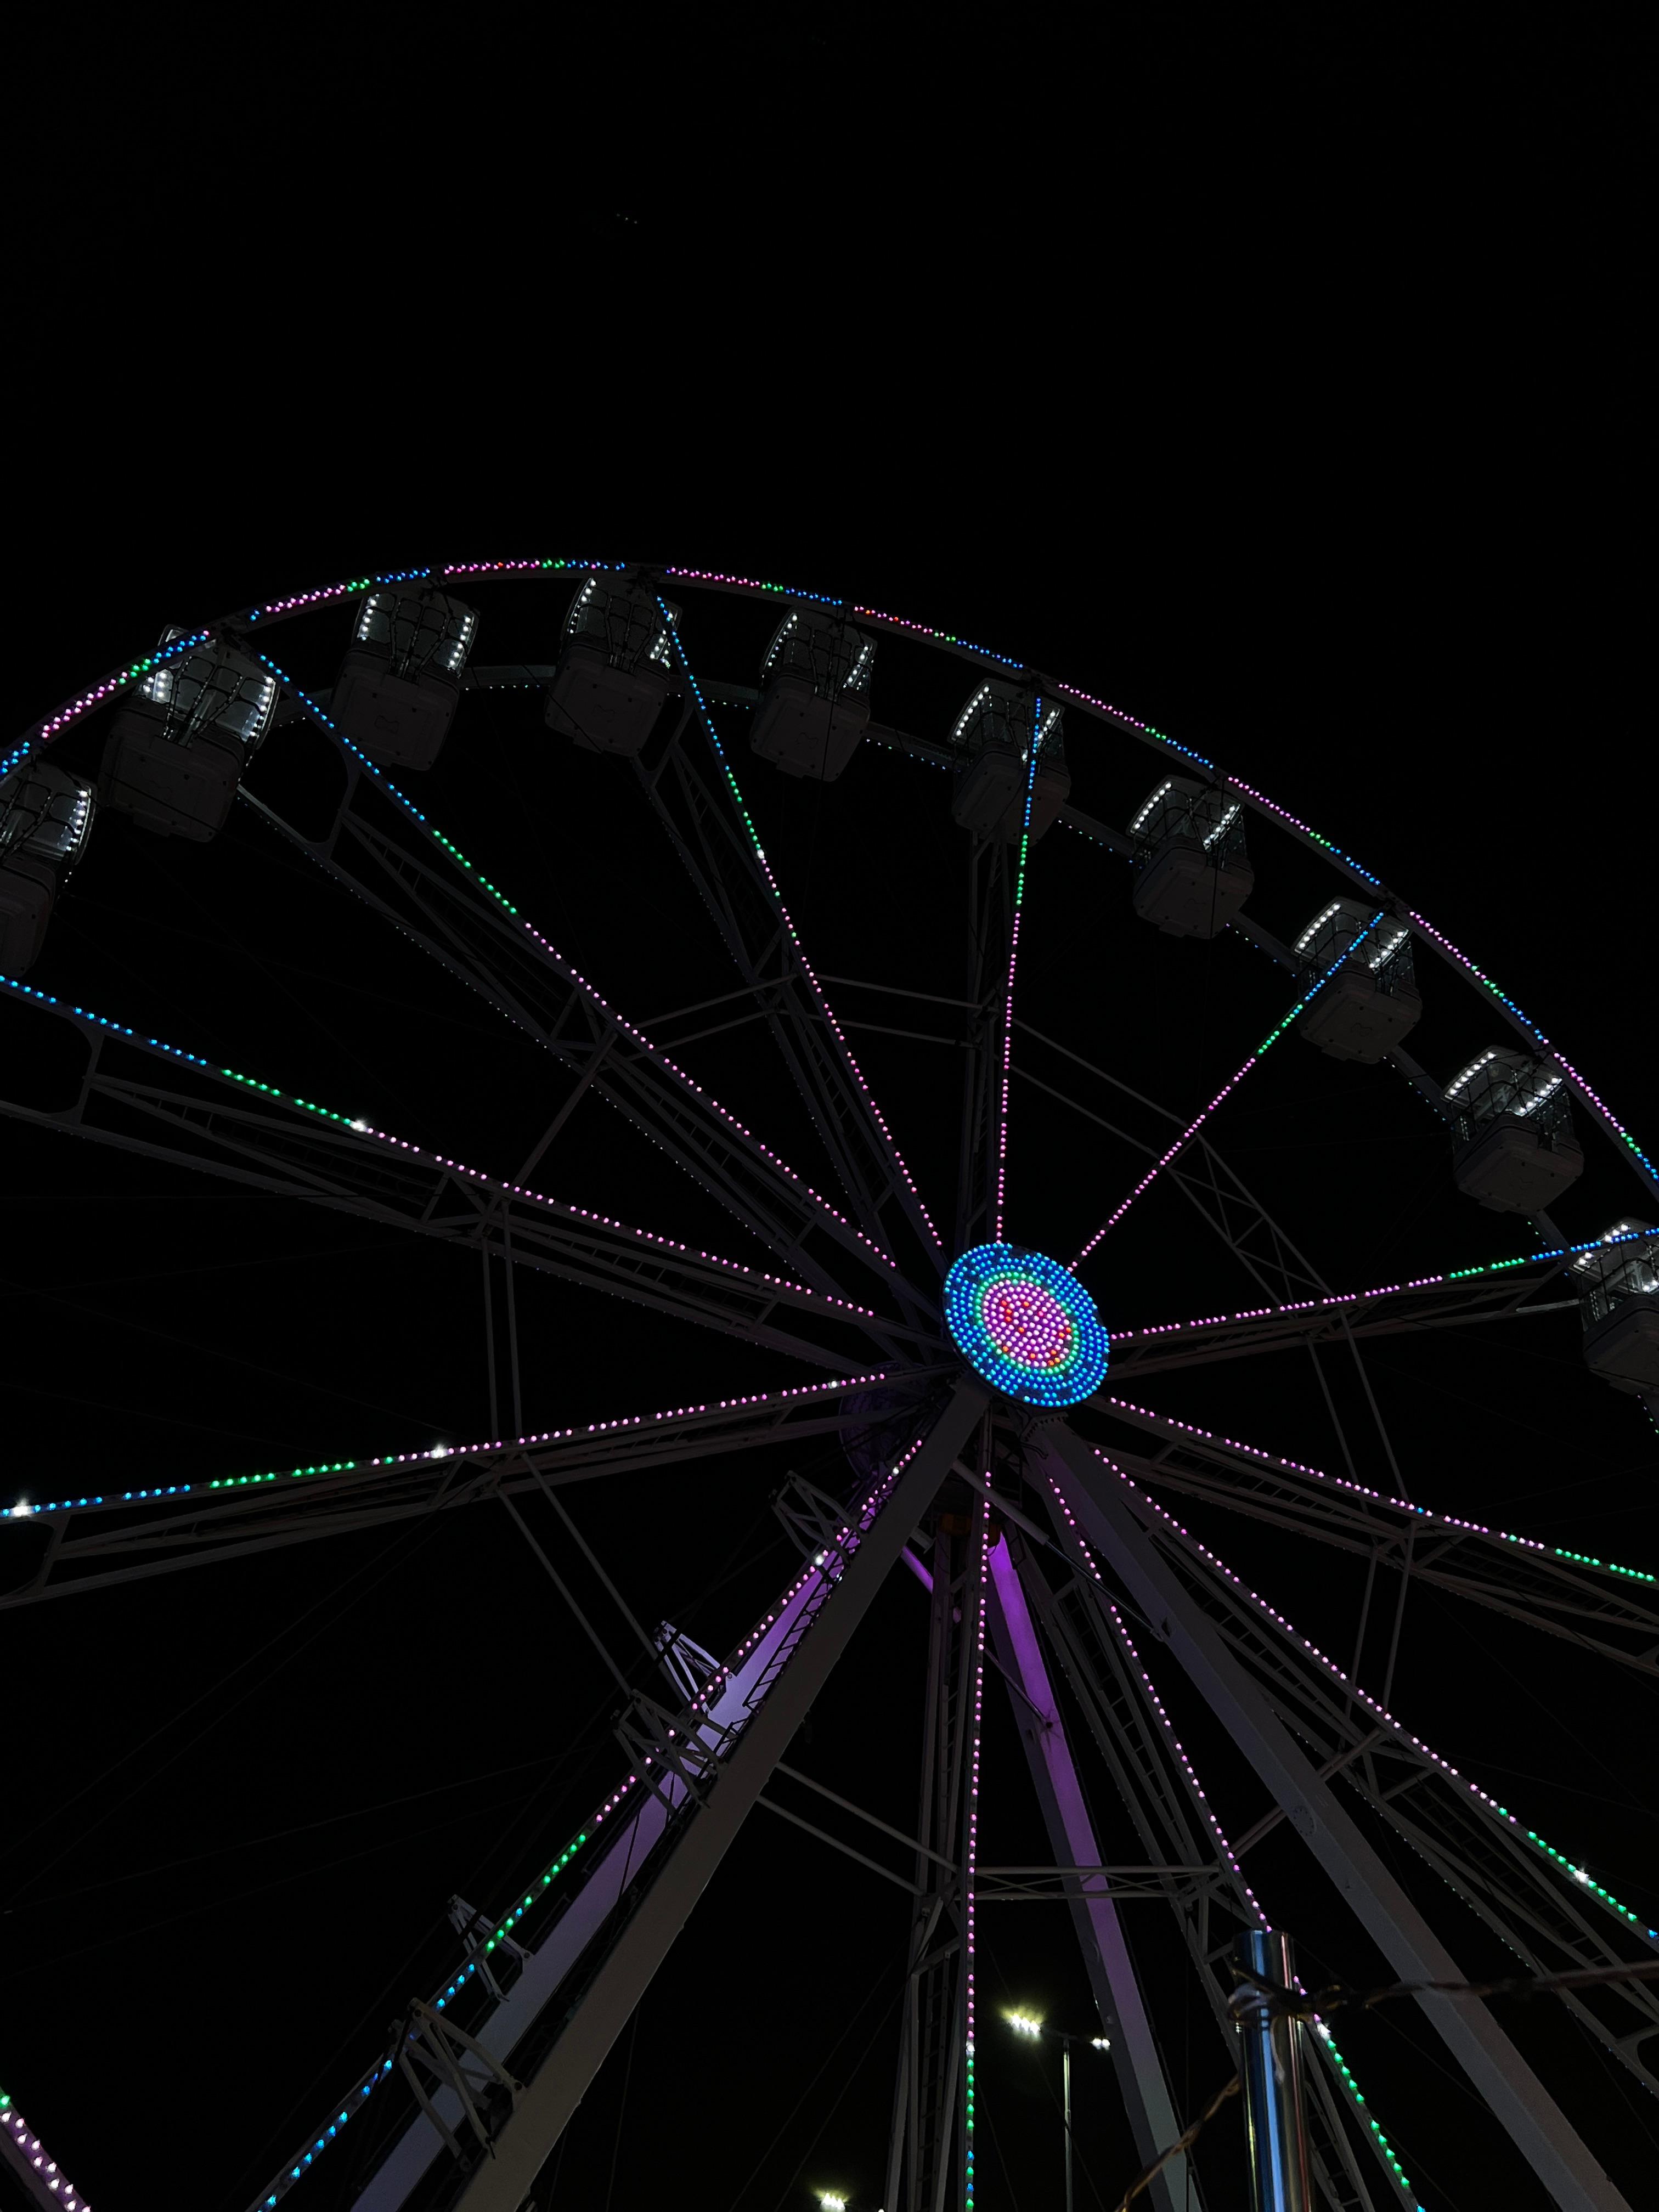 A blighting ferris wheel at night